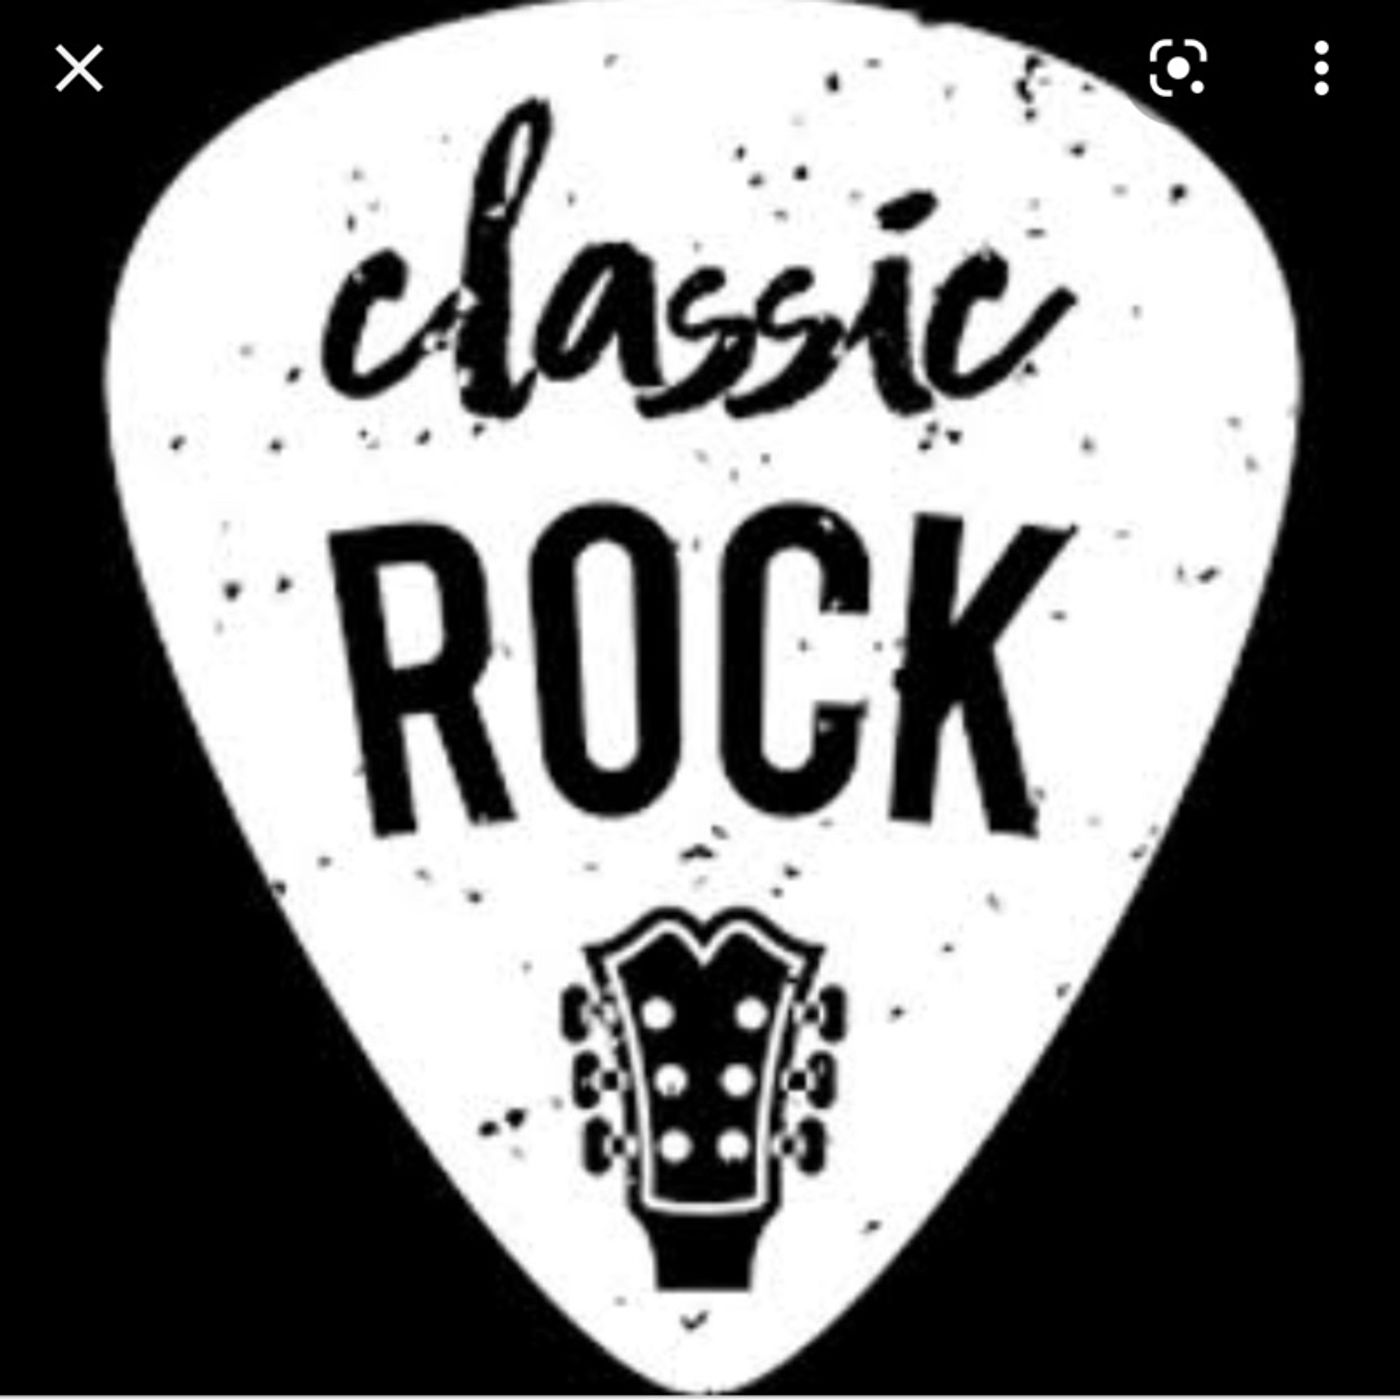 CLASSIC ROCK playlist comentada#classicrock #wearamask #matrix #cobrakai #twd #theflash #superman #hawkeye #scream #batman #sing2